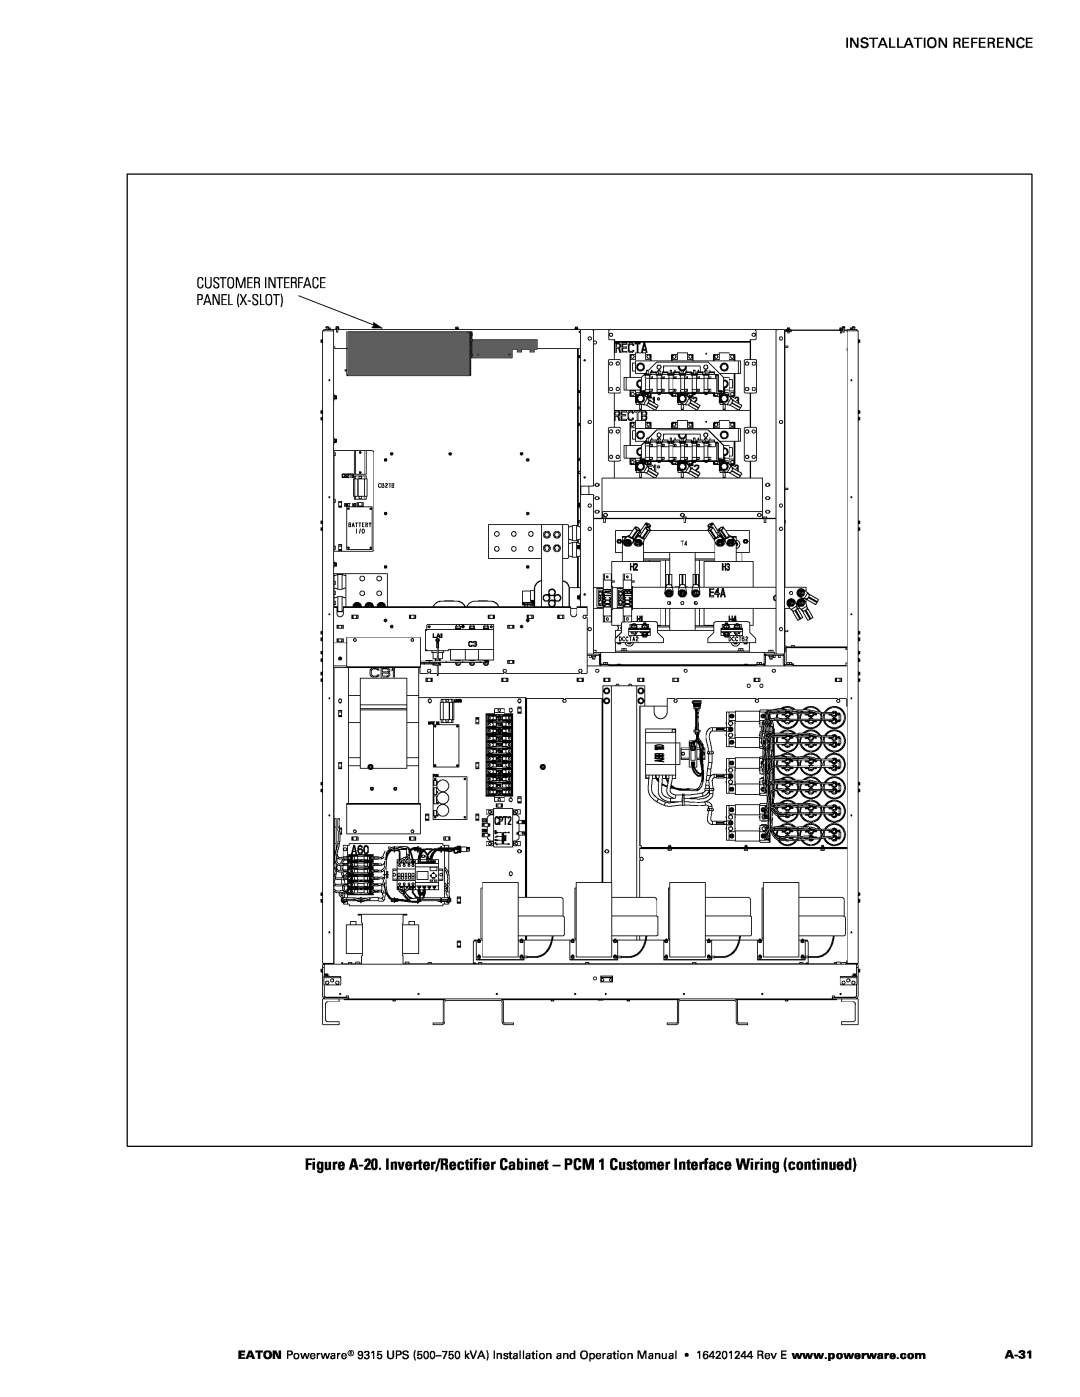 Powerware Powerware 9315 operation manual A-31, Customer Interface 